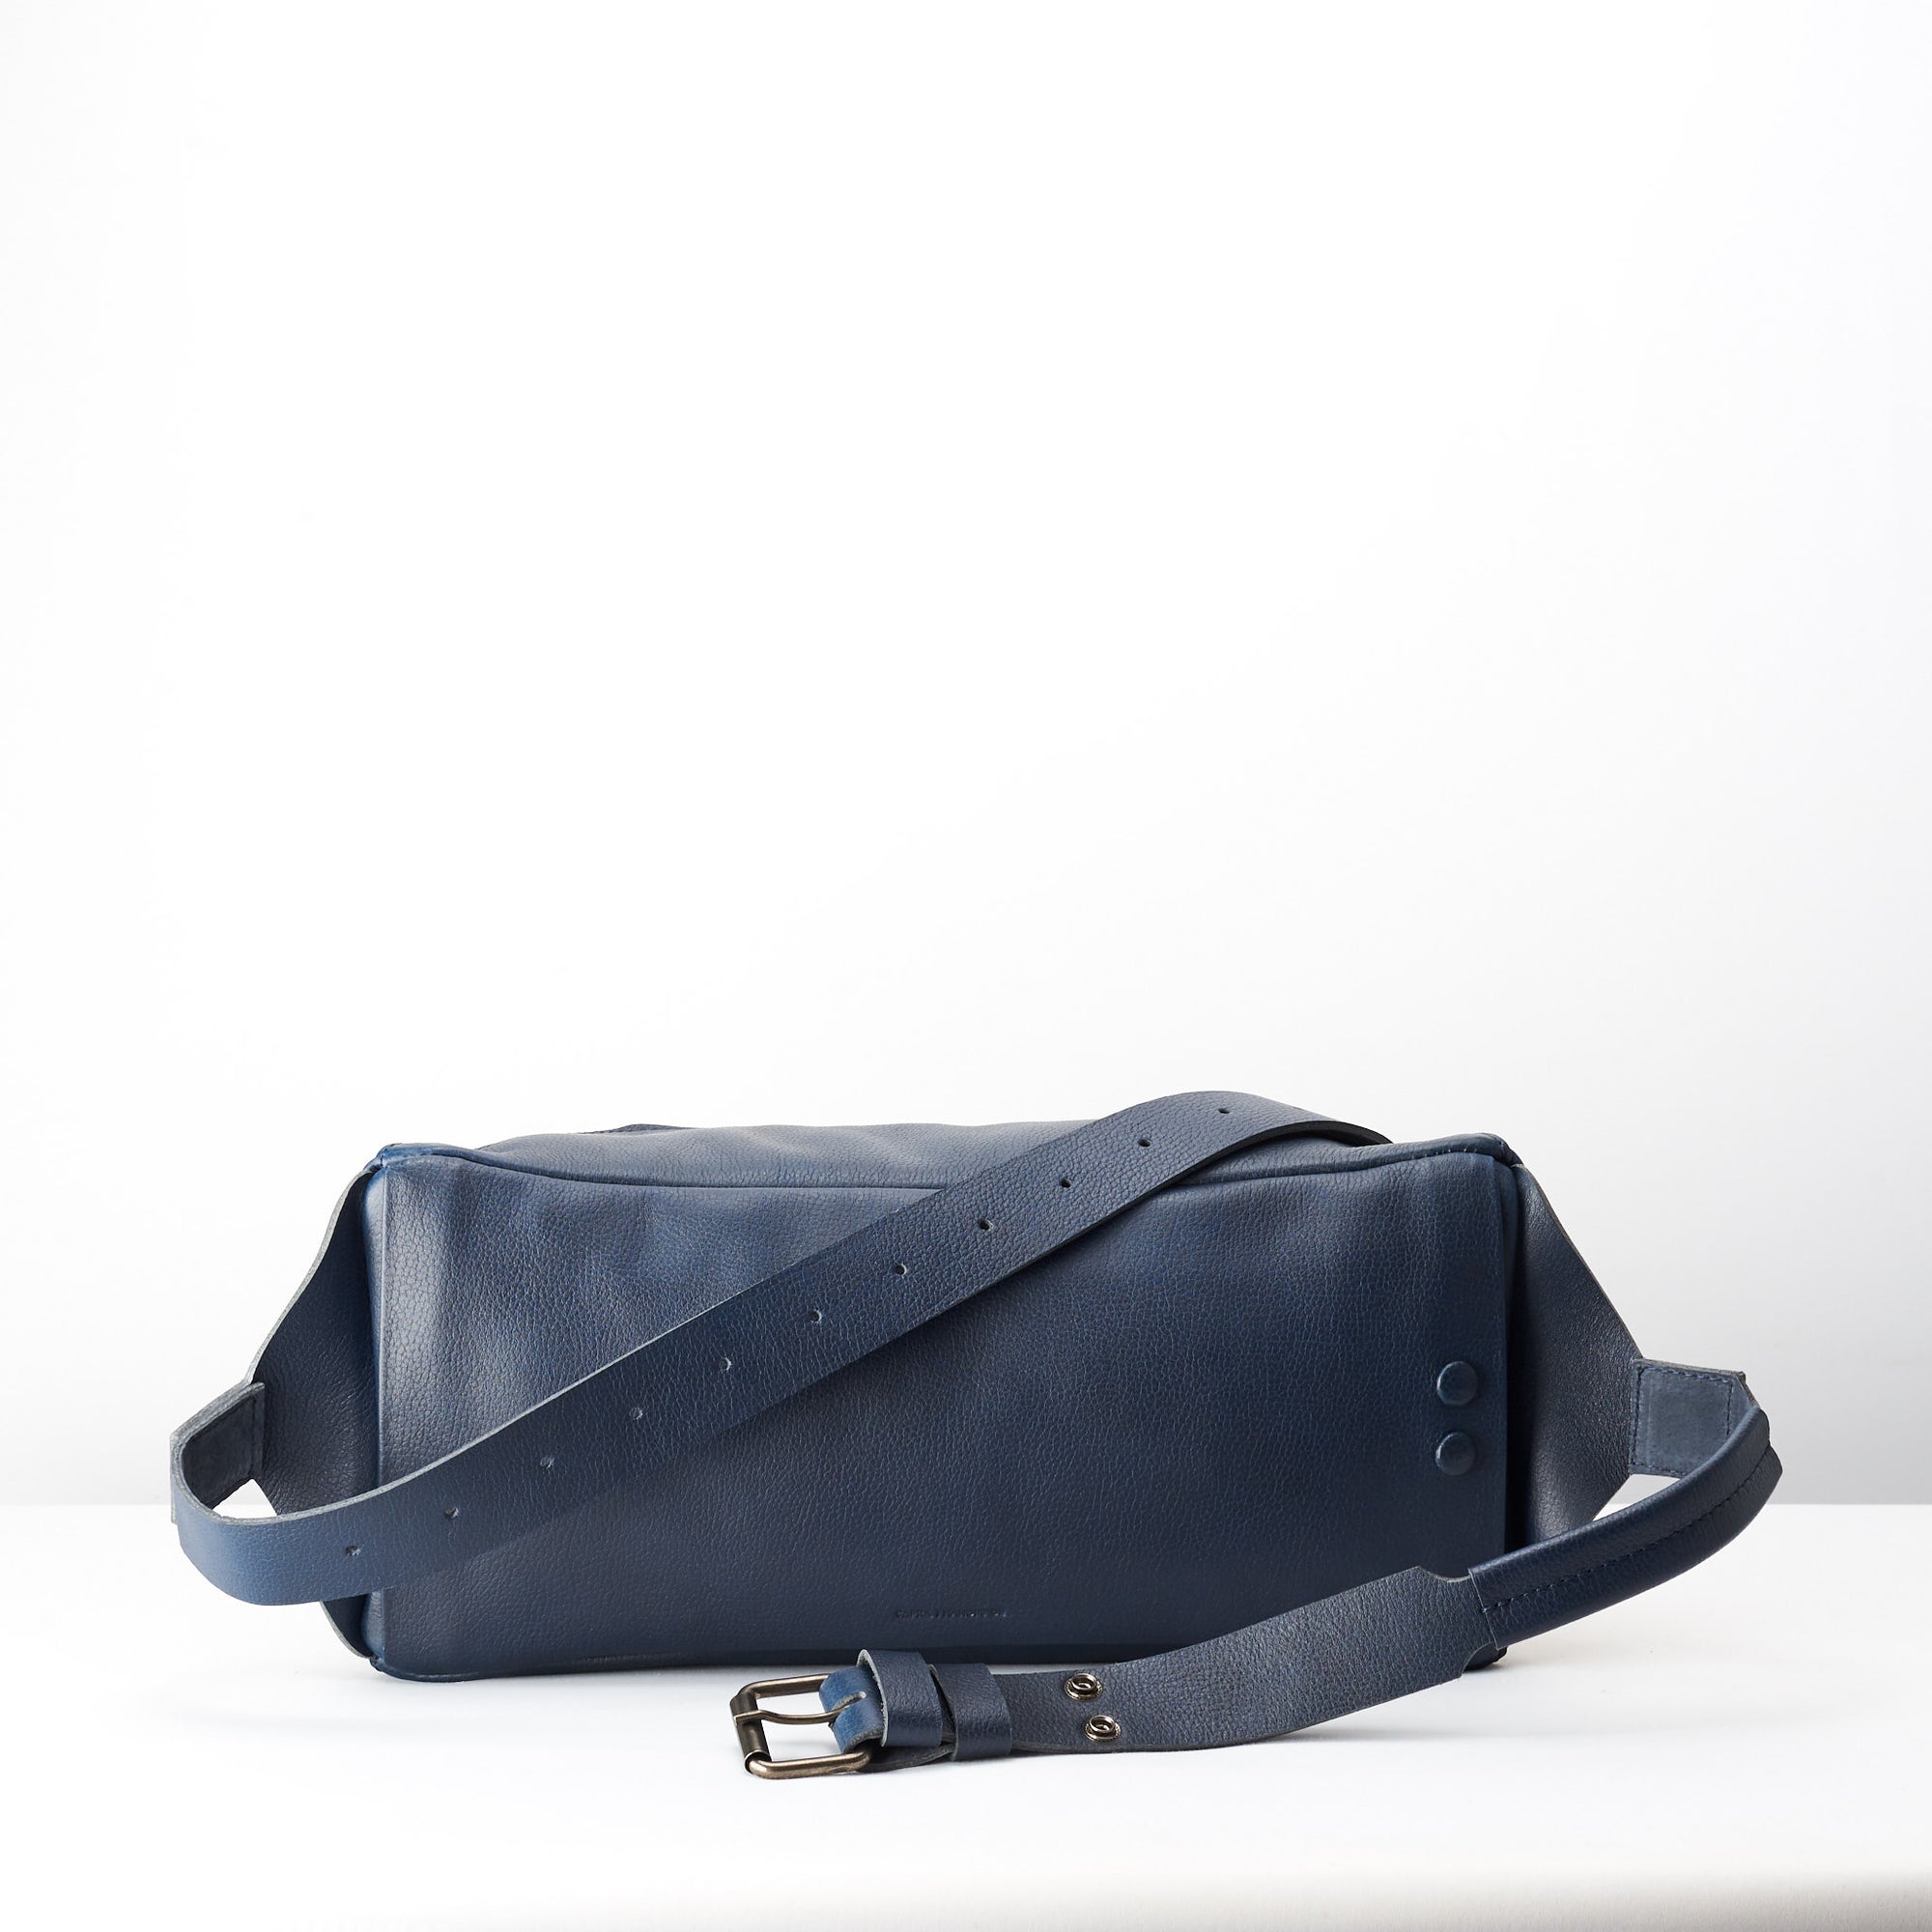 Back handmade bag. Fenek blue sling bag for men by Capra Leather. Belt bag for outdoors. 